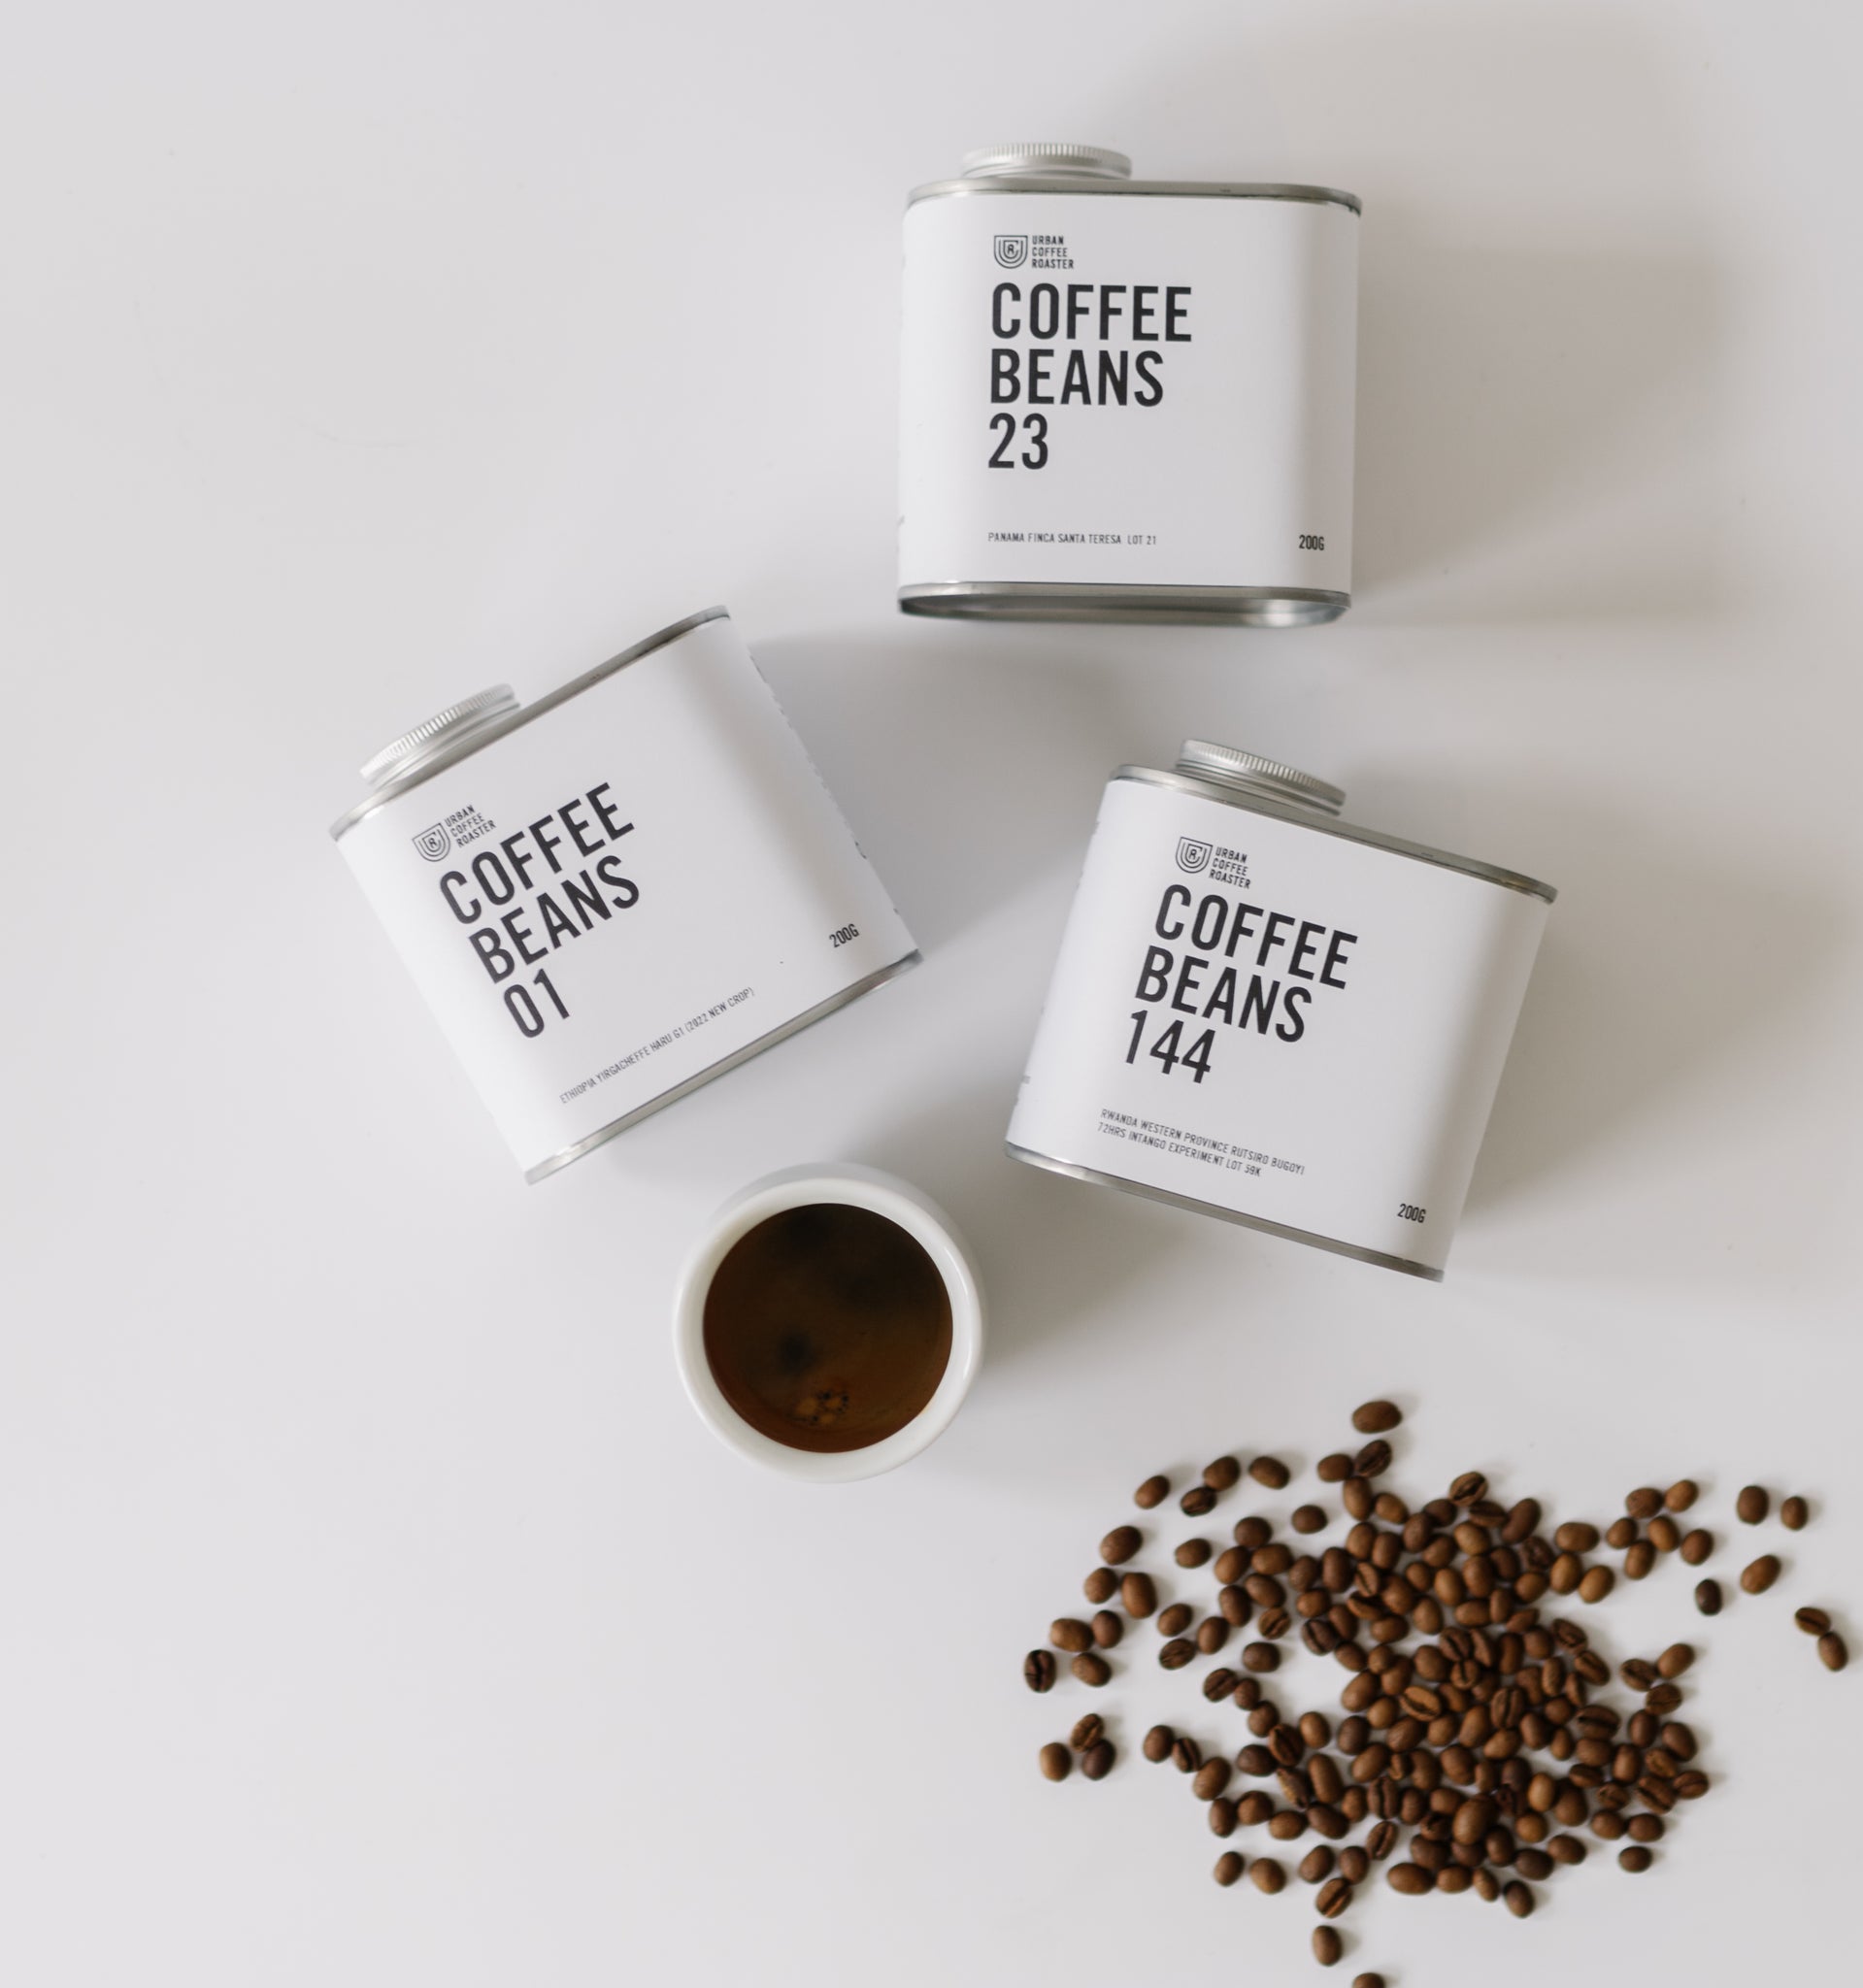 Monthly Coffee Subscription (Espresso Bean) - Urban Coffee Roaster